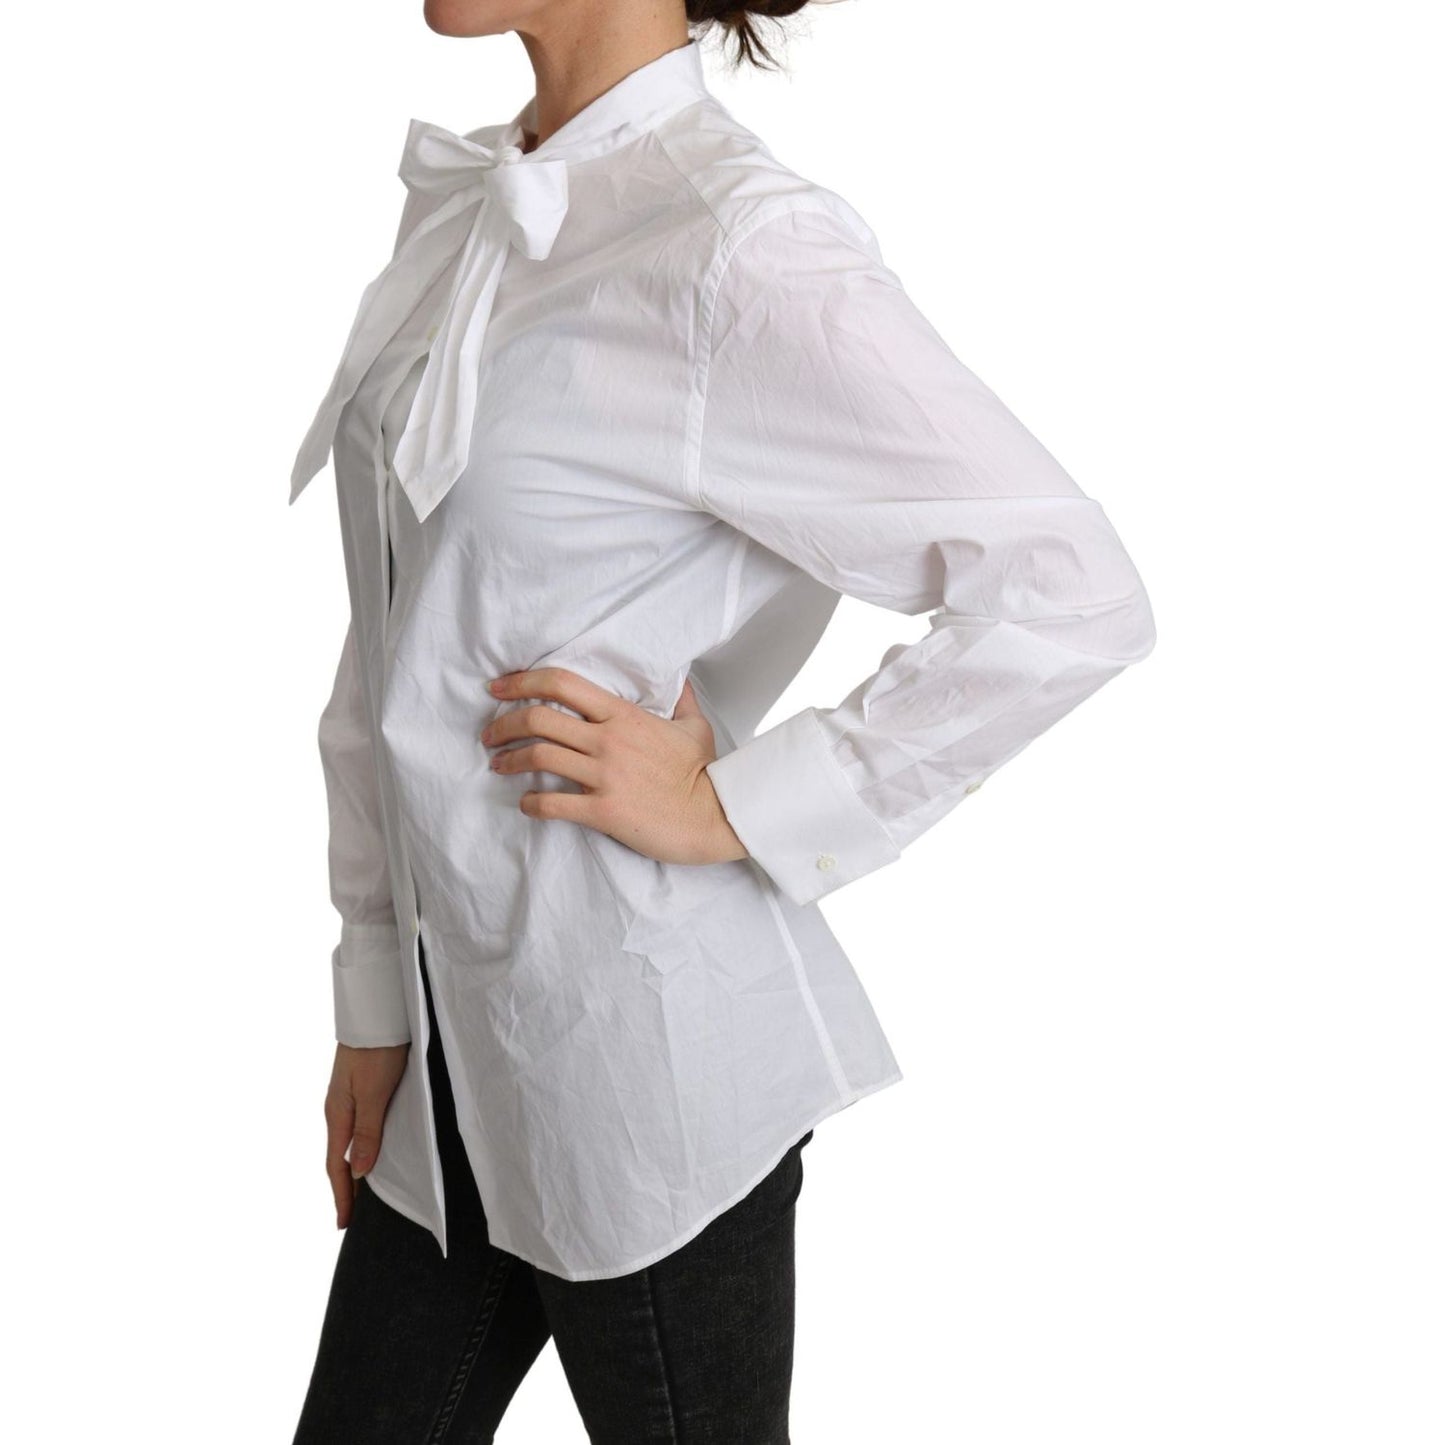 Dolce & Gabbana Elegant Scarf Neck Cotton Blouse cotton-white-scarf-neck-shirt-blouse-top